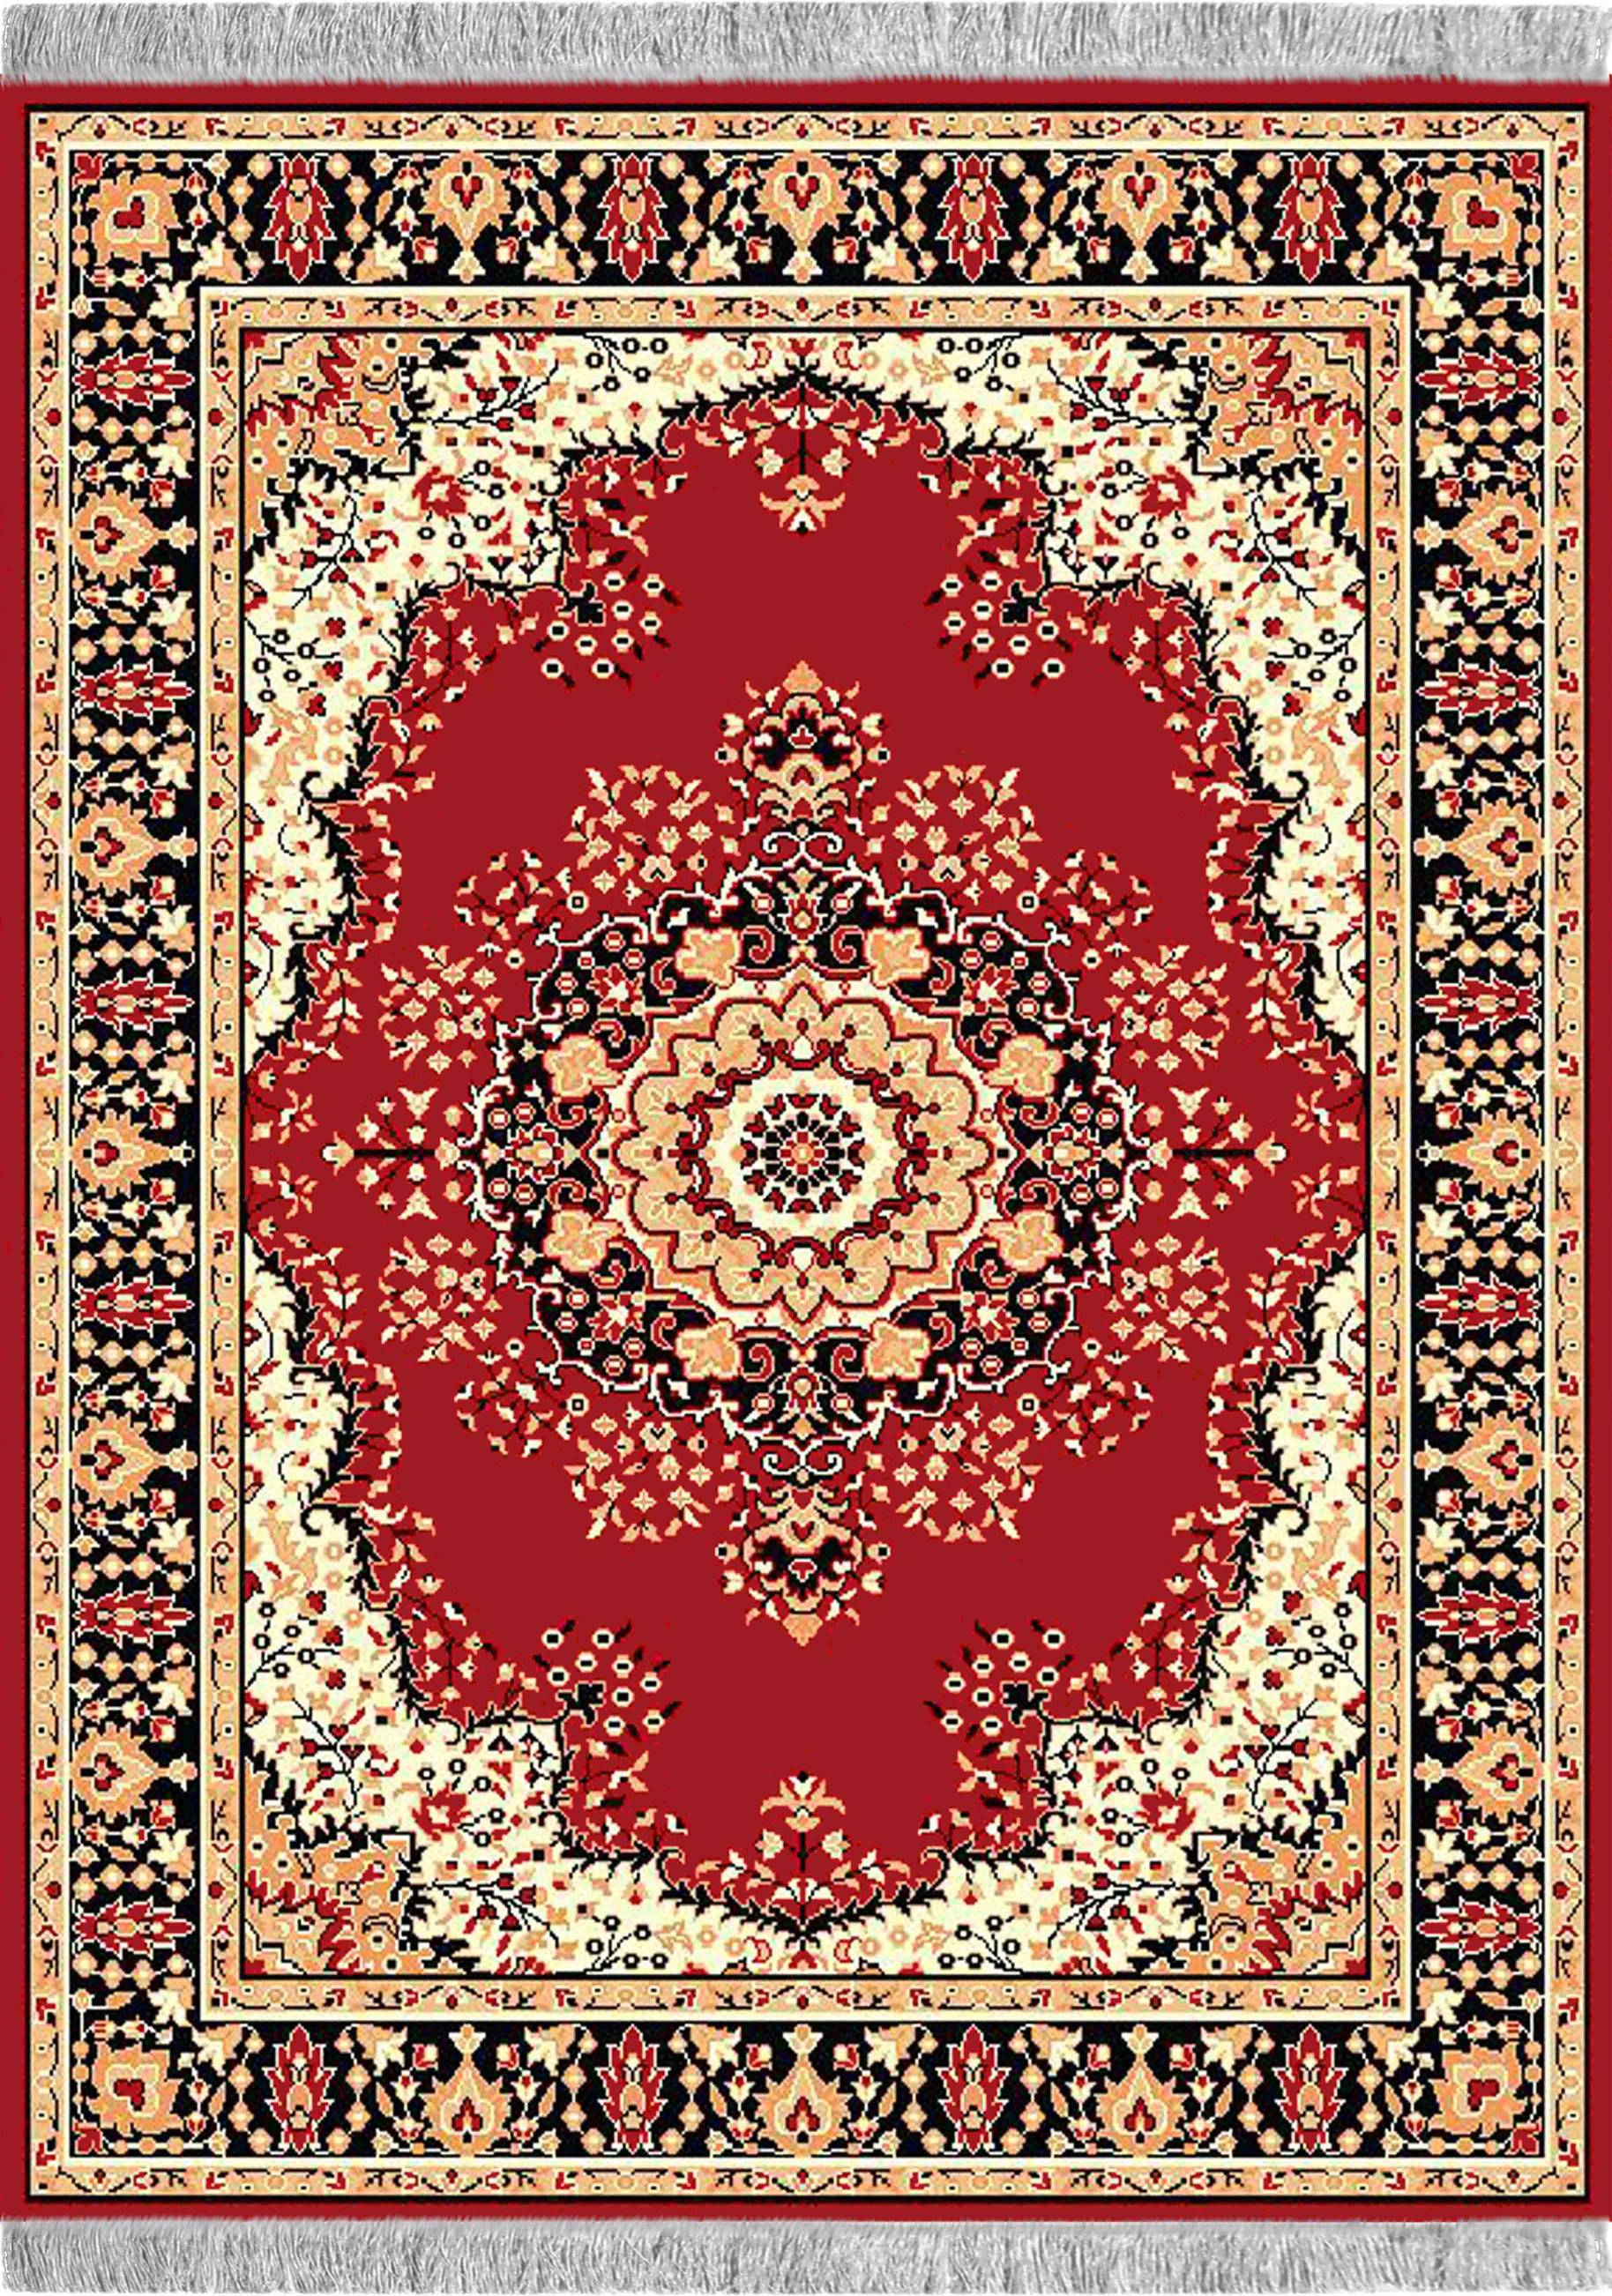 Detec™ Presto Traditional Persian Patterned Carpet